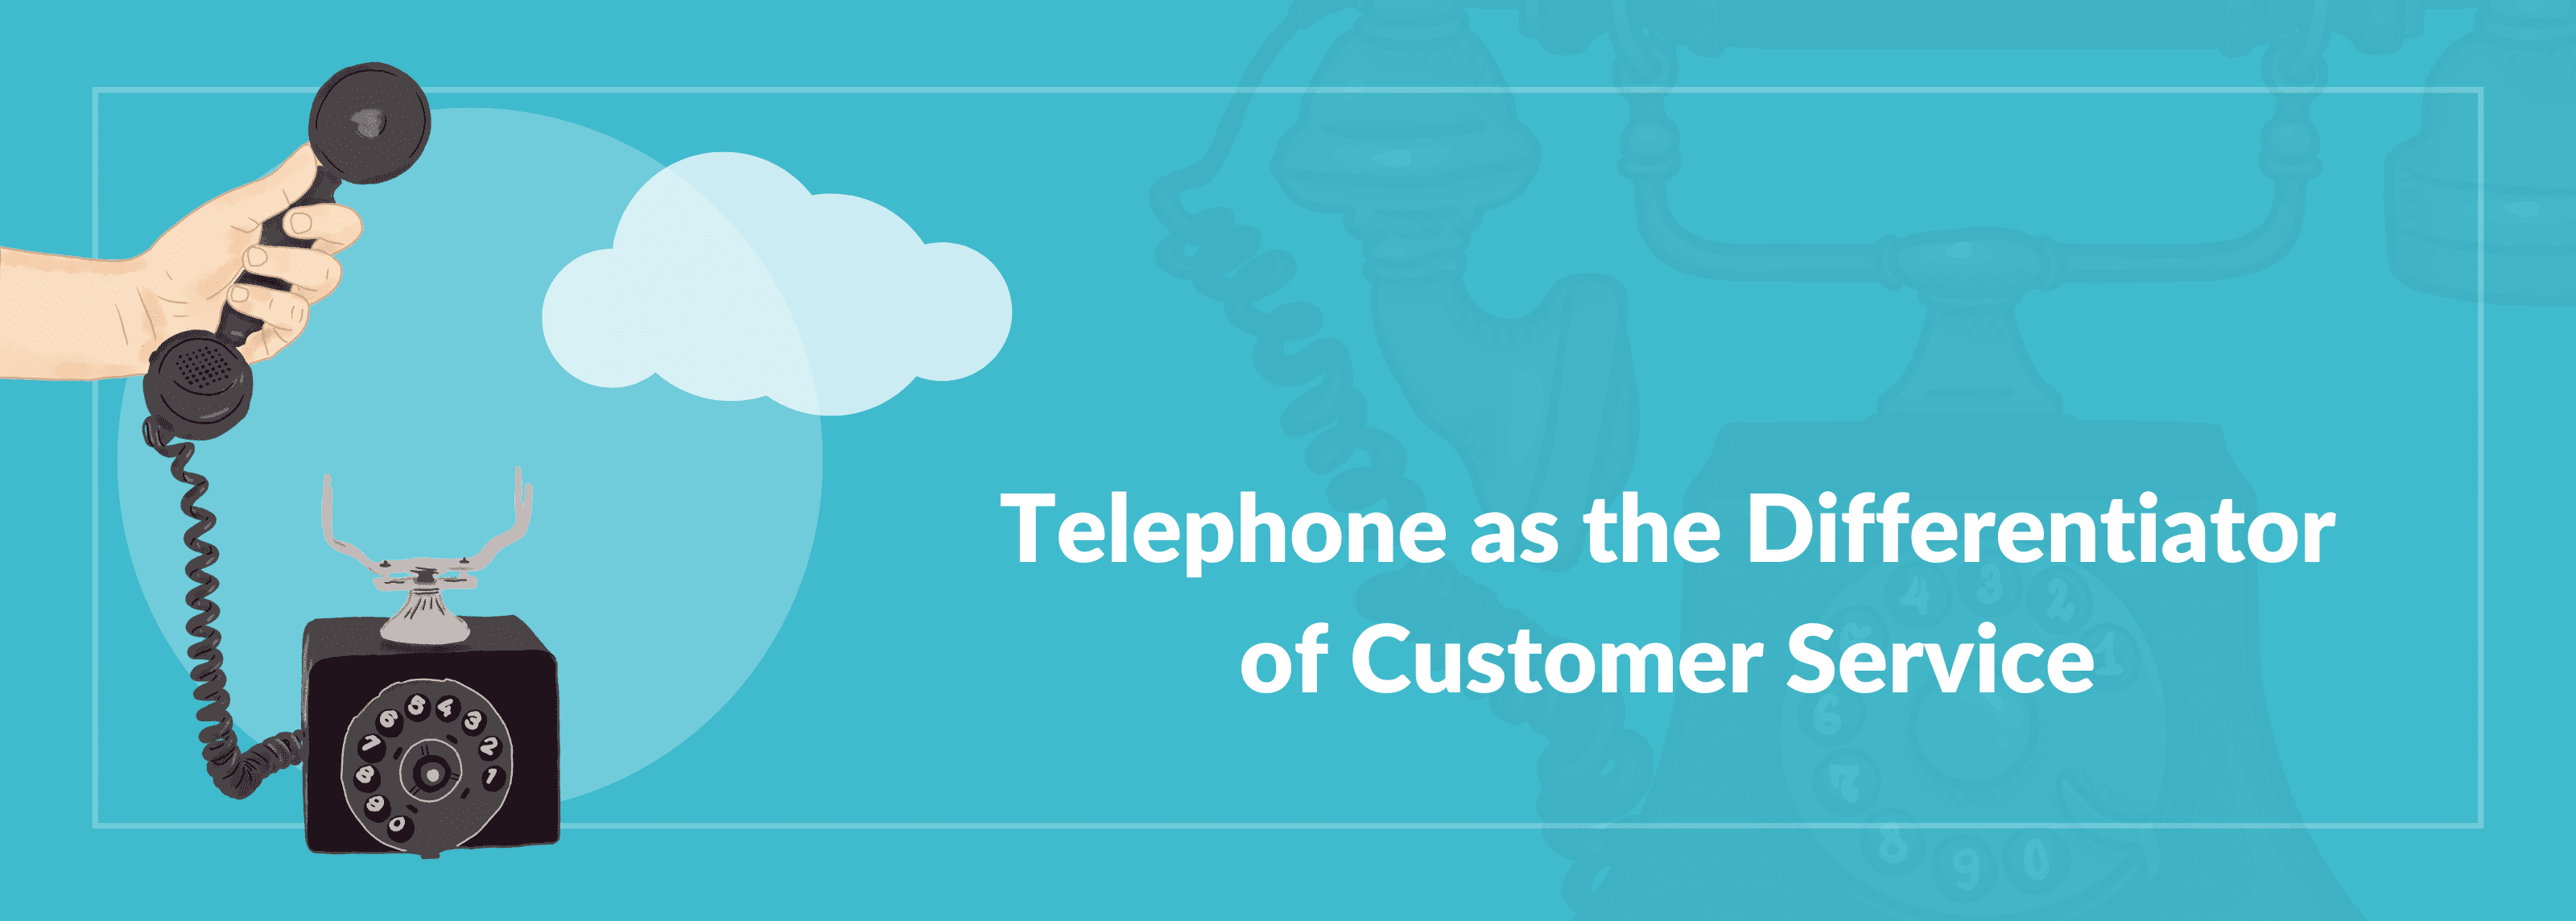 Telephone - Differentiator of Customer Service